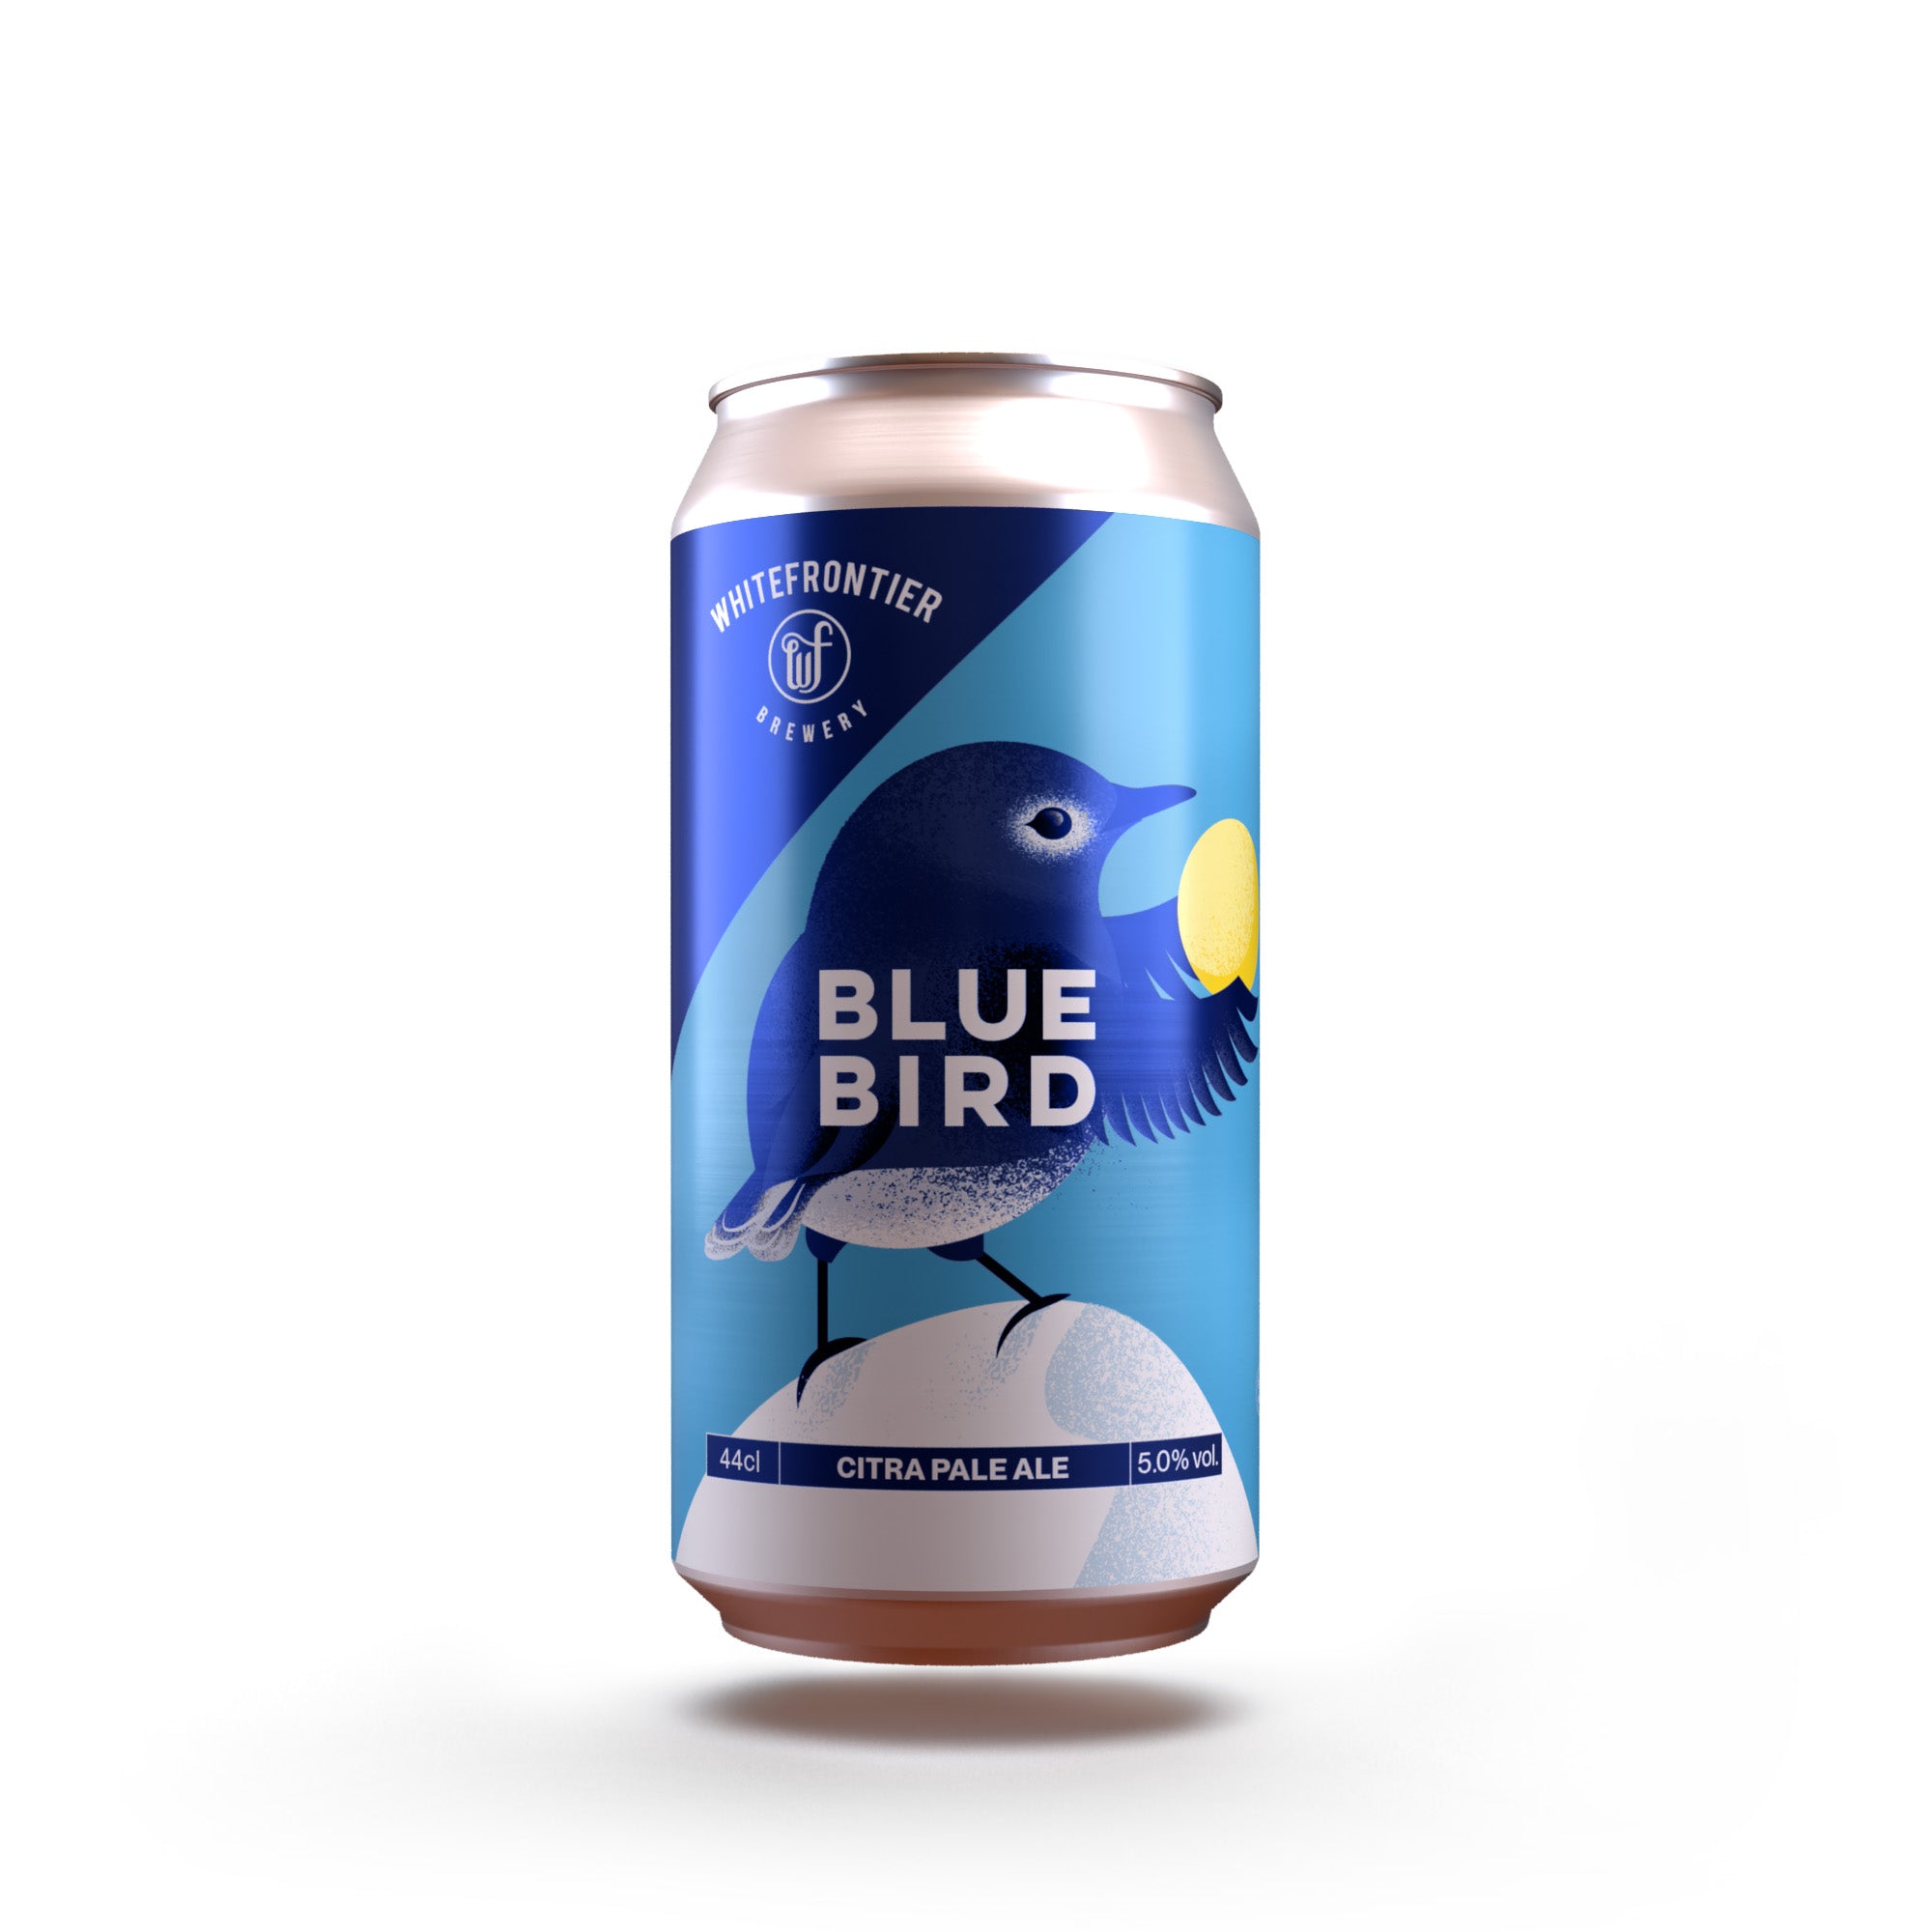 Bluebird can. A bird blue with a sun. Bier. Citra pale ale